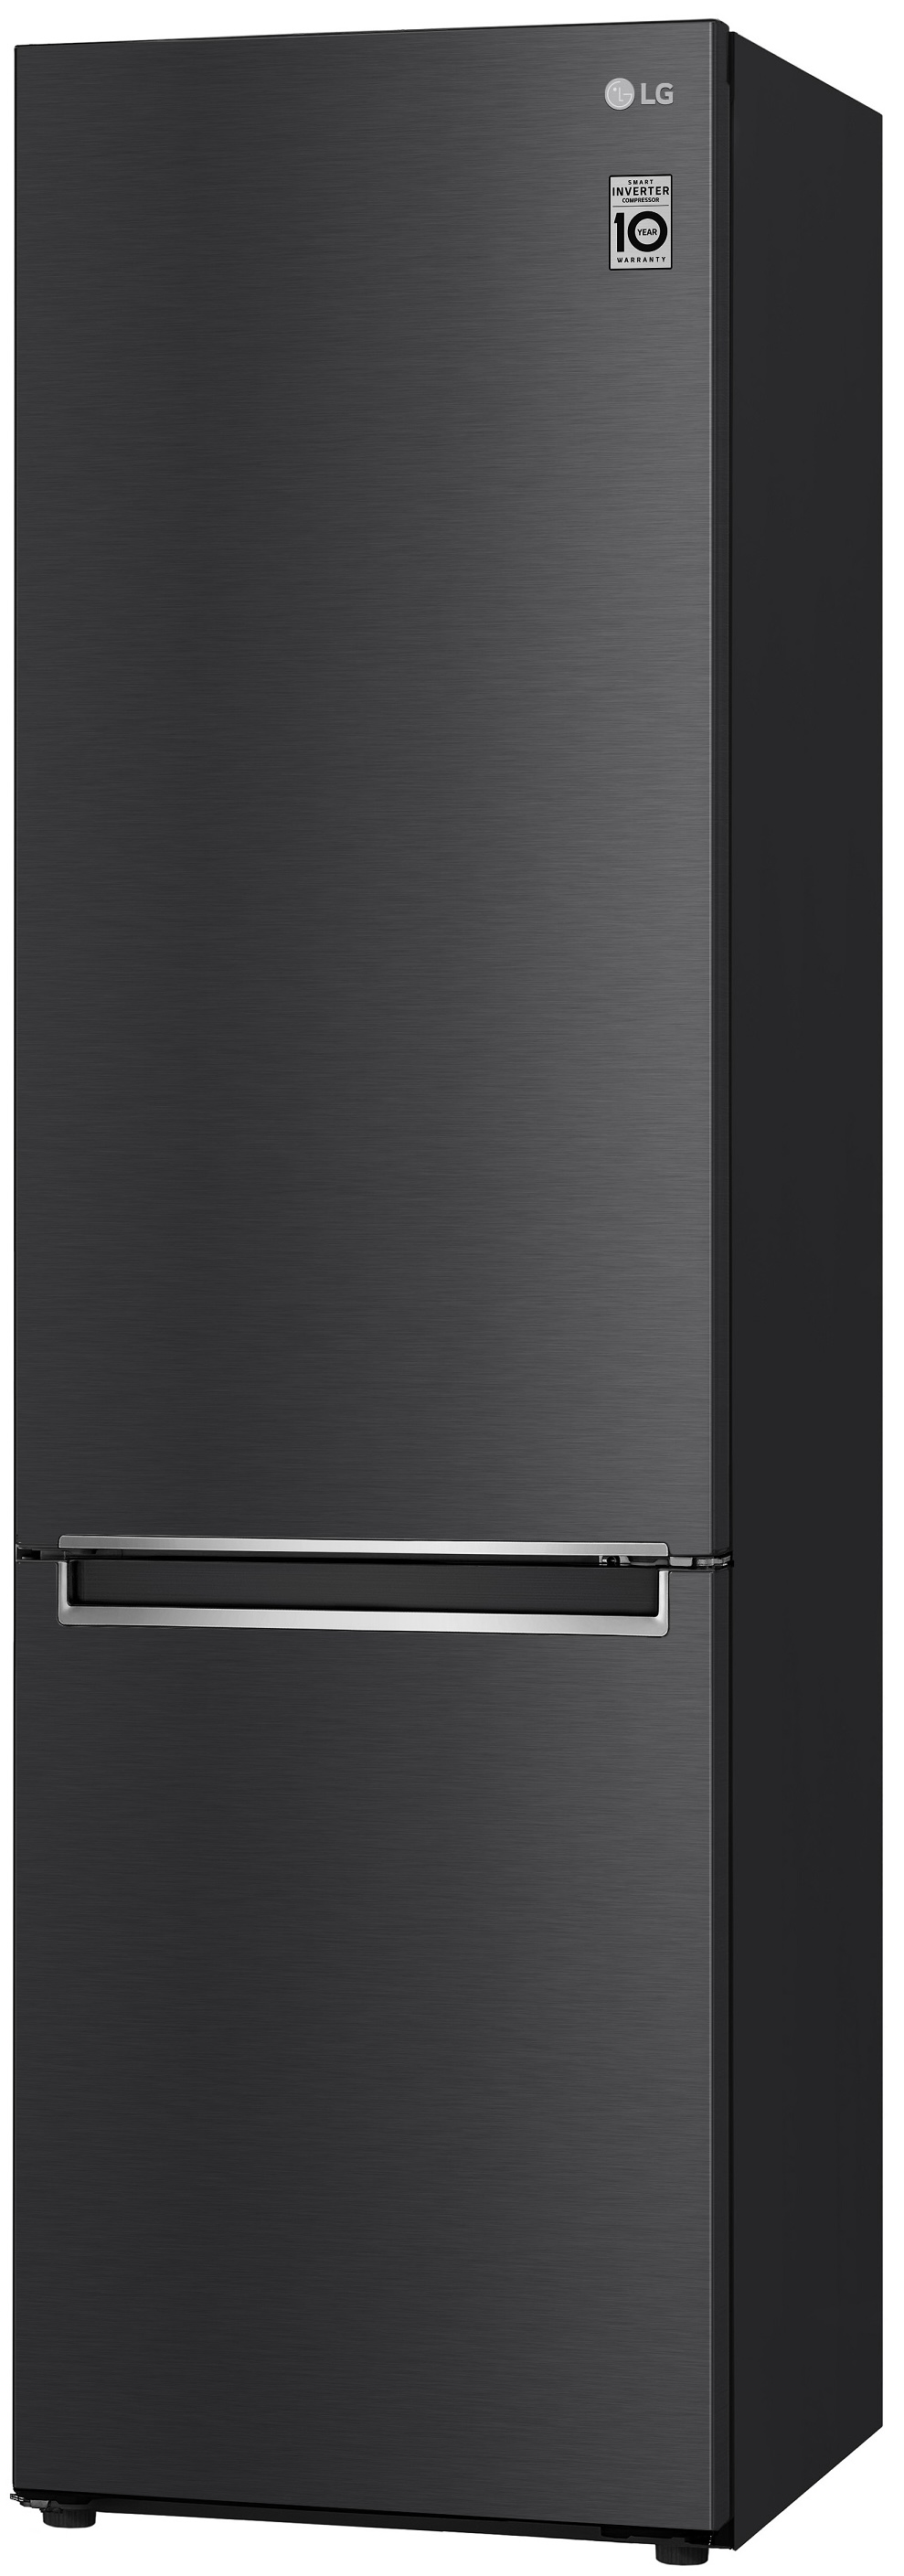 обзор товара Холодильник LG GW-B509SBNM - фотография 12